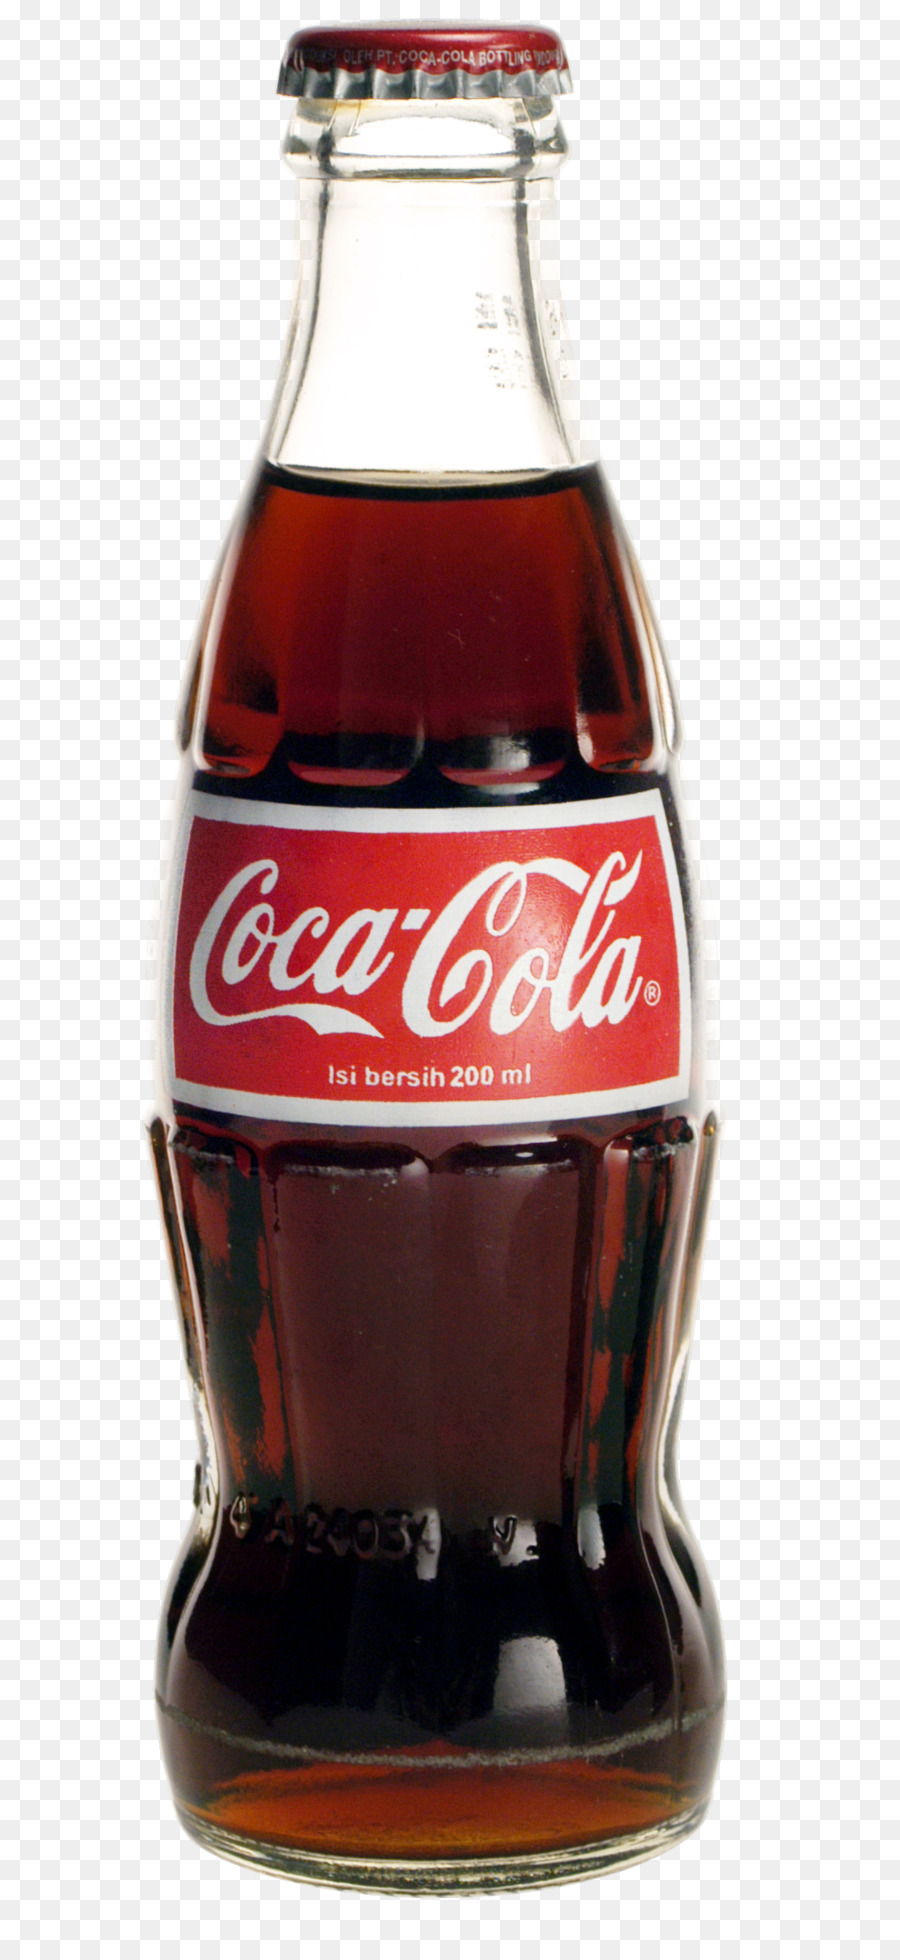 The Coca-Cola Company Bottle Erythroxylum coca - Coca cola bottle PNG image png download - 795*2377 - Free Transparent Coca Cola png Download.